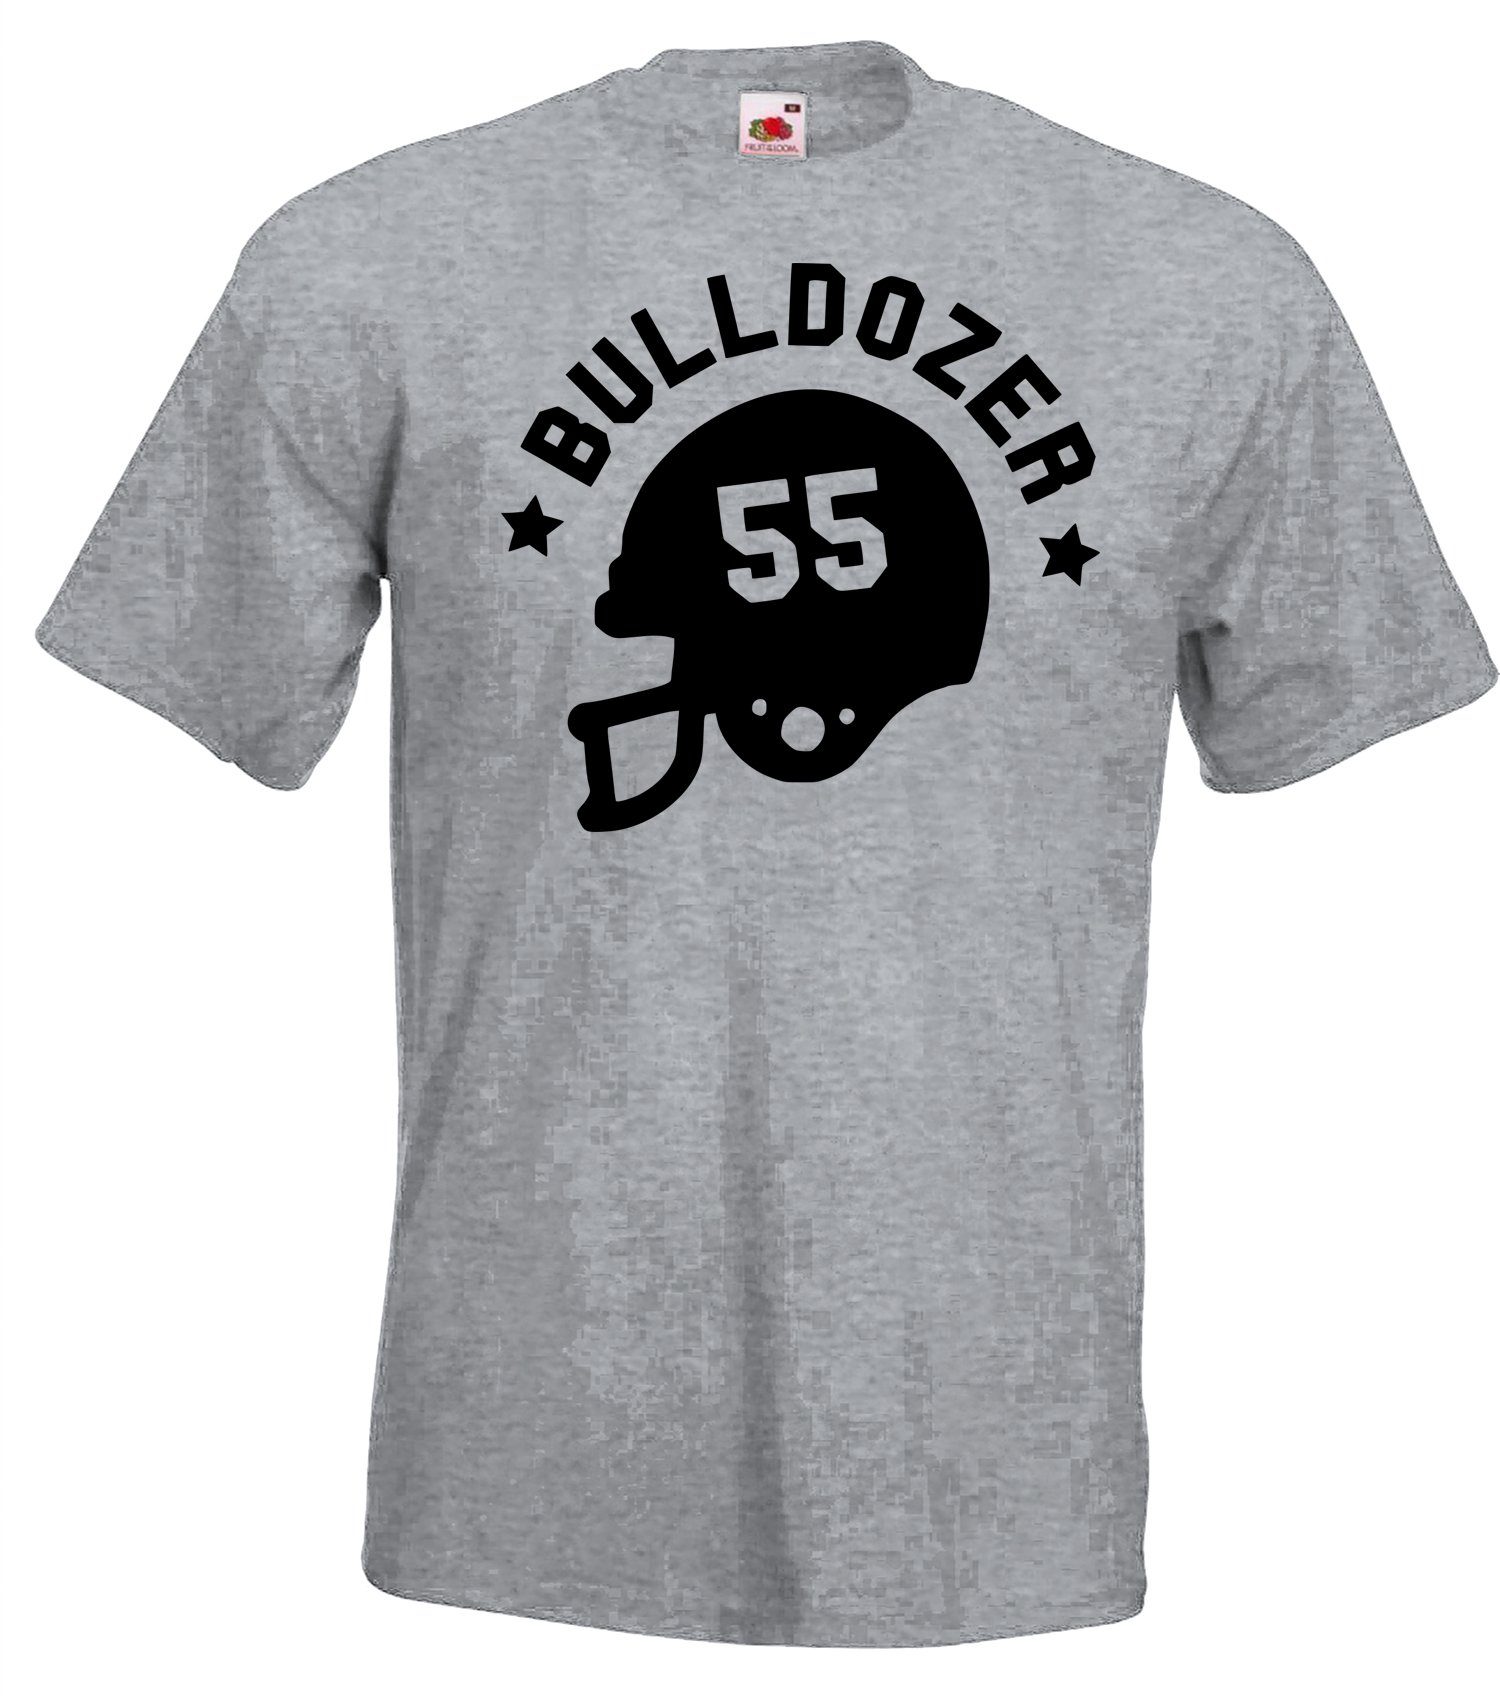 Bulldozer trendigem mit Designz Grau T-Shirt Frontprint Herren Youth Shirt